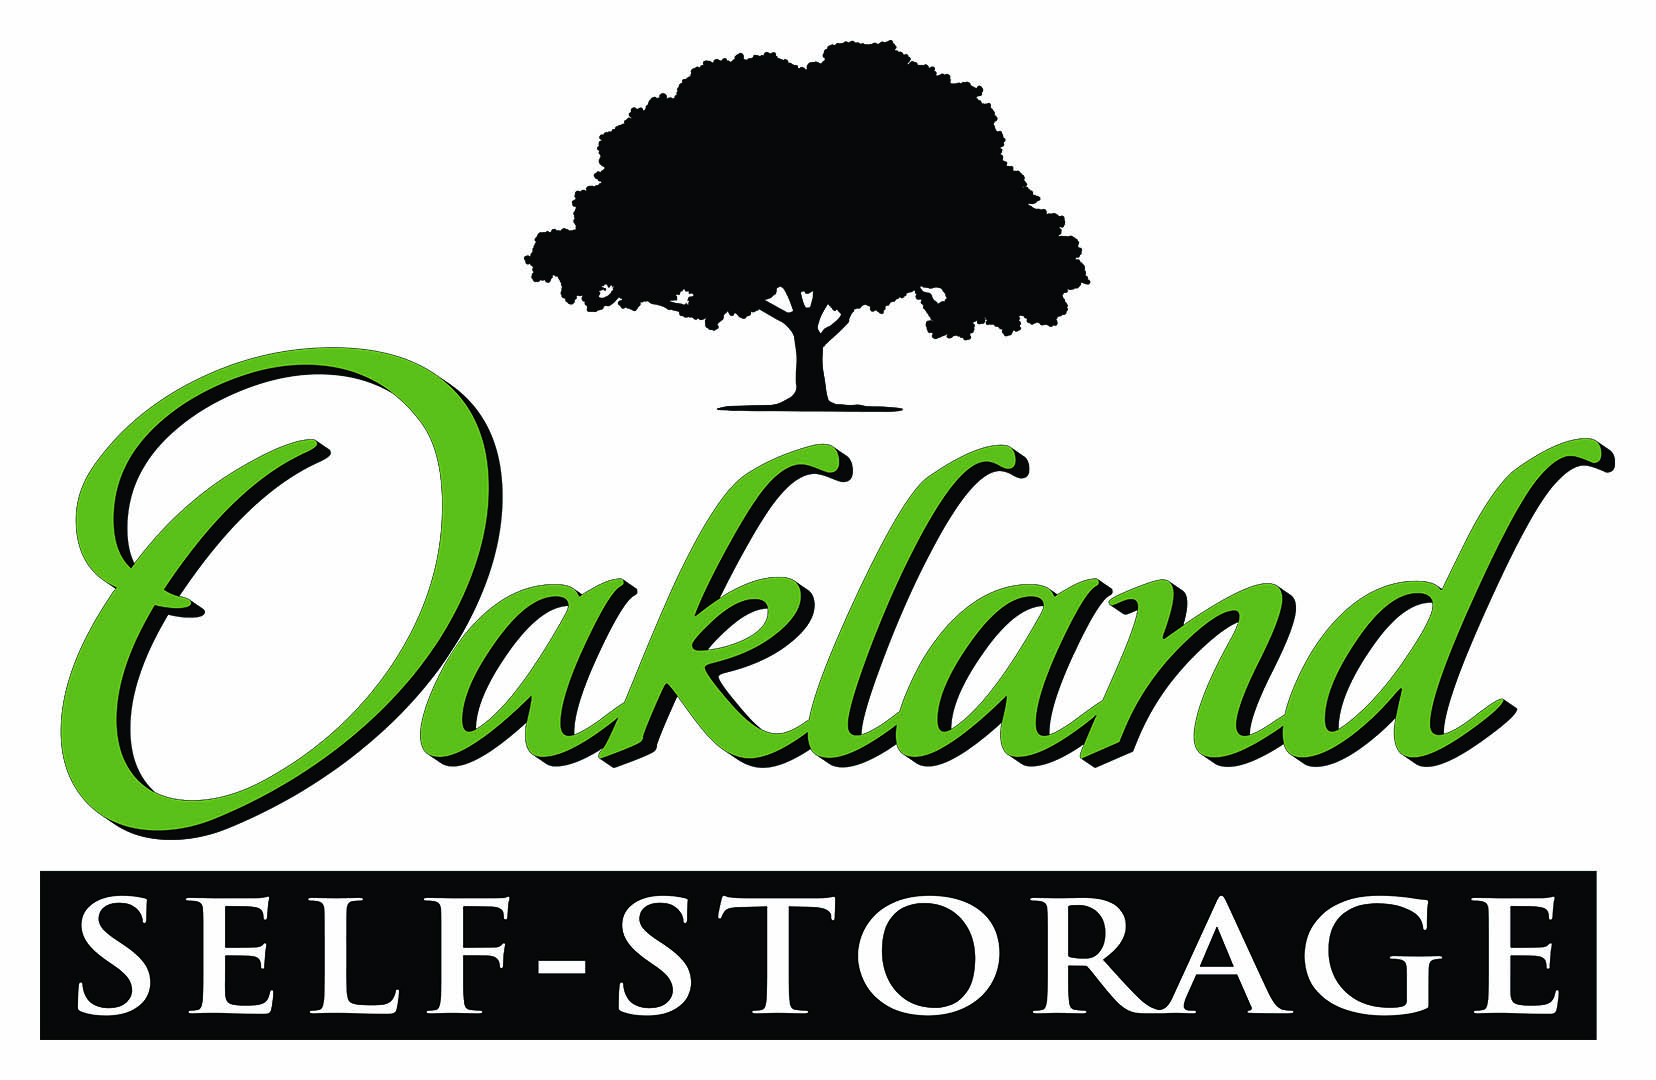 Oakland Self Storage Logo Square4